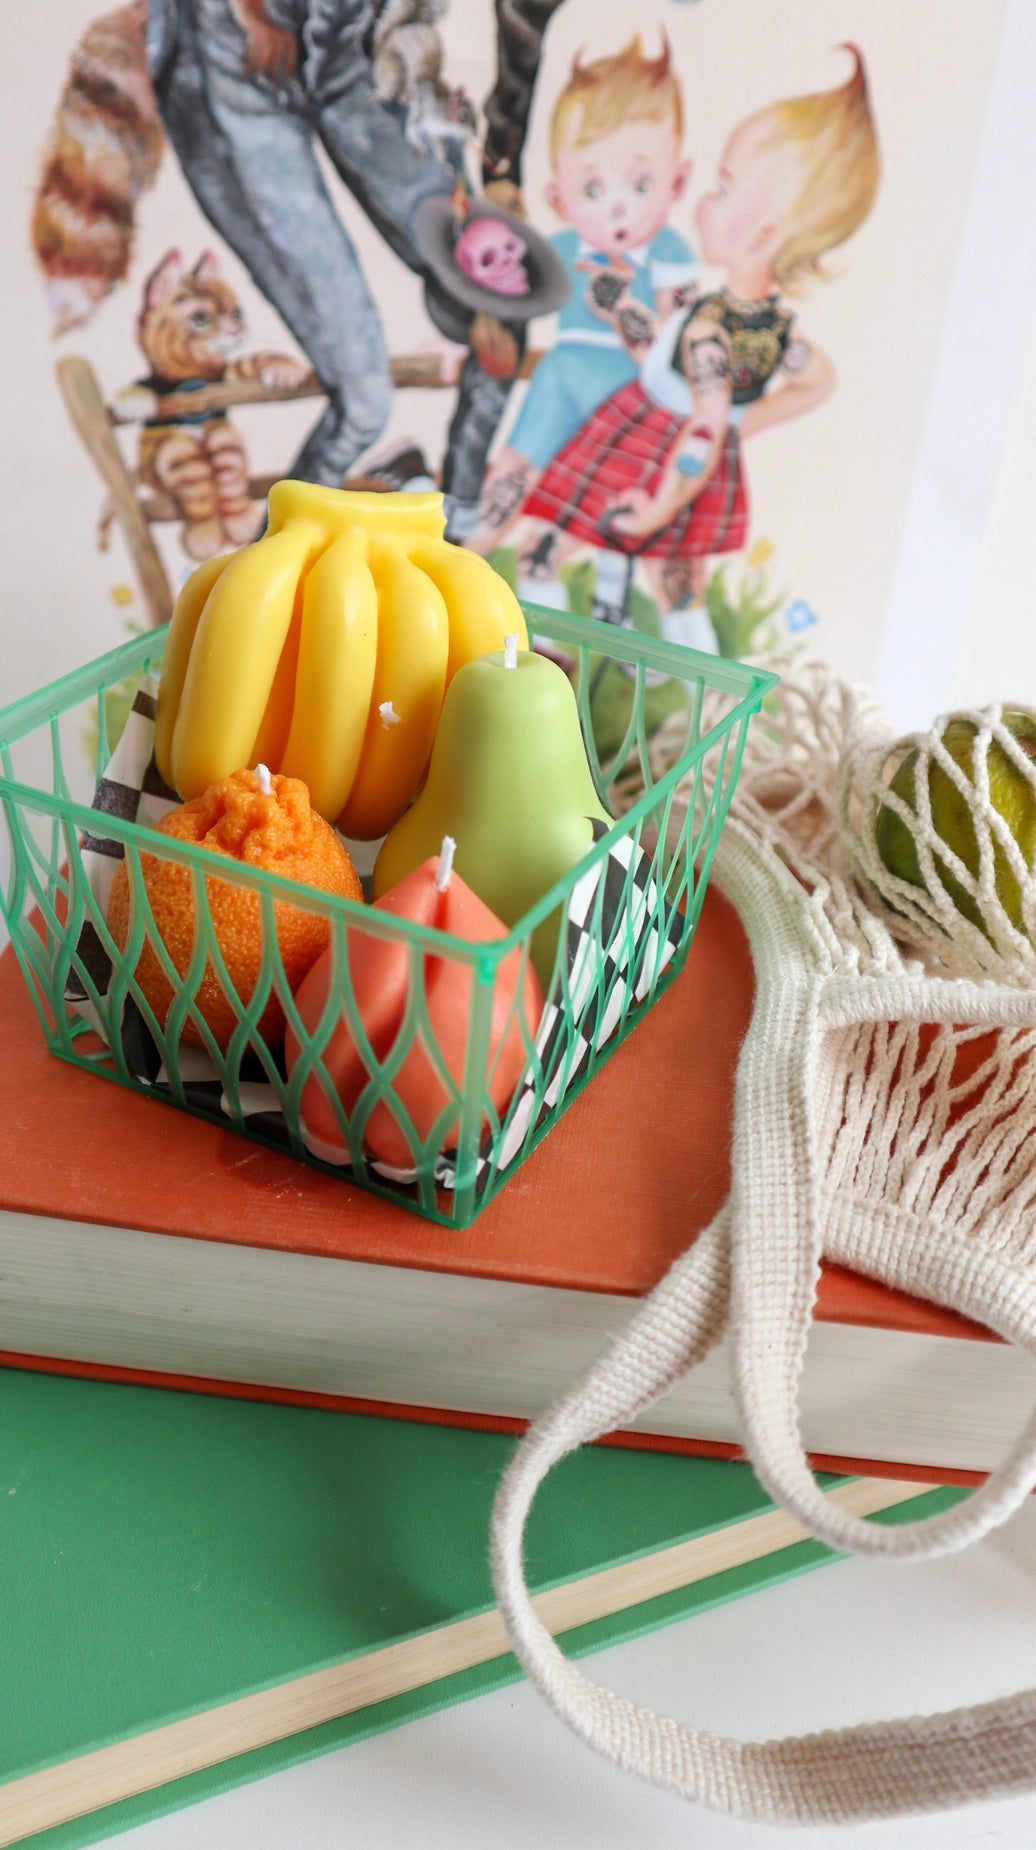 Fruit Candles In Basket